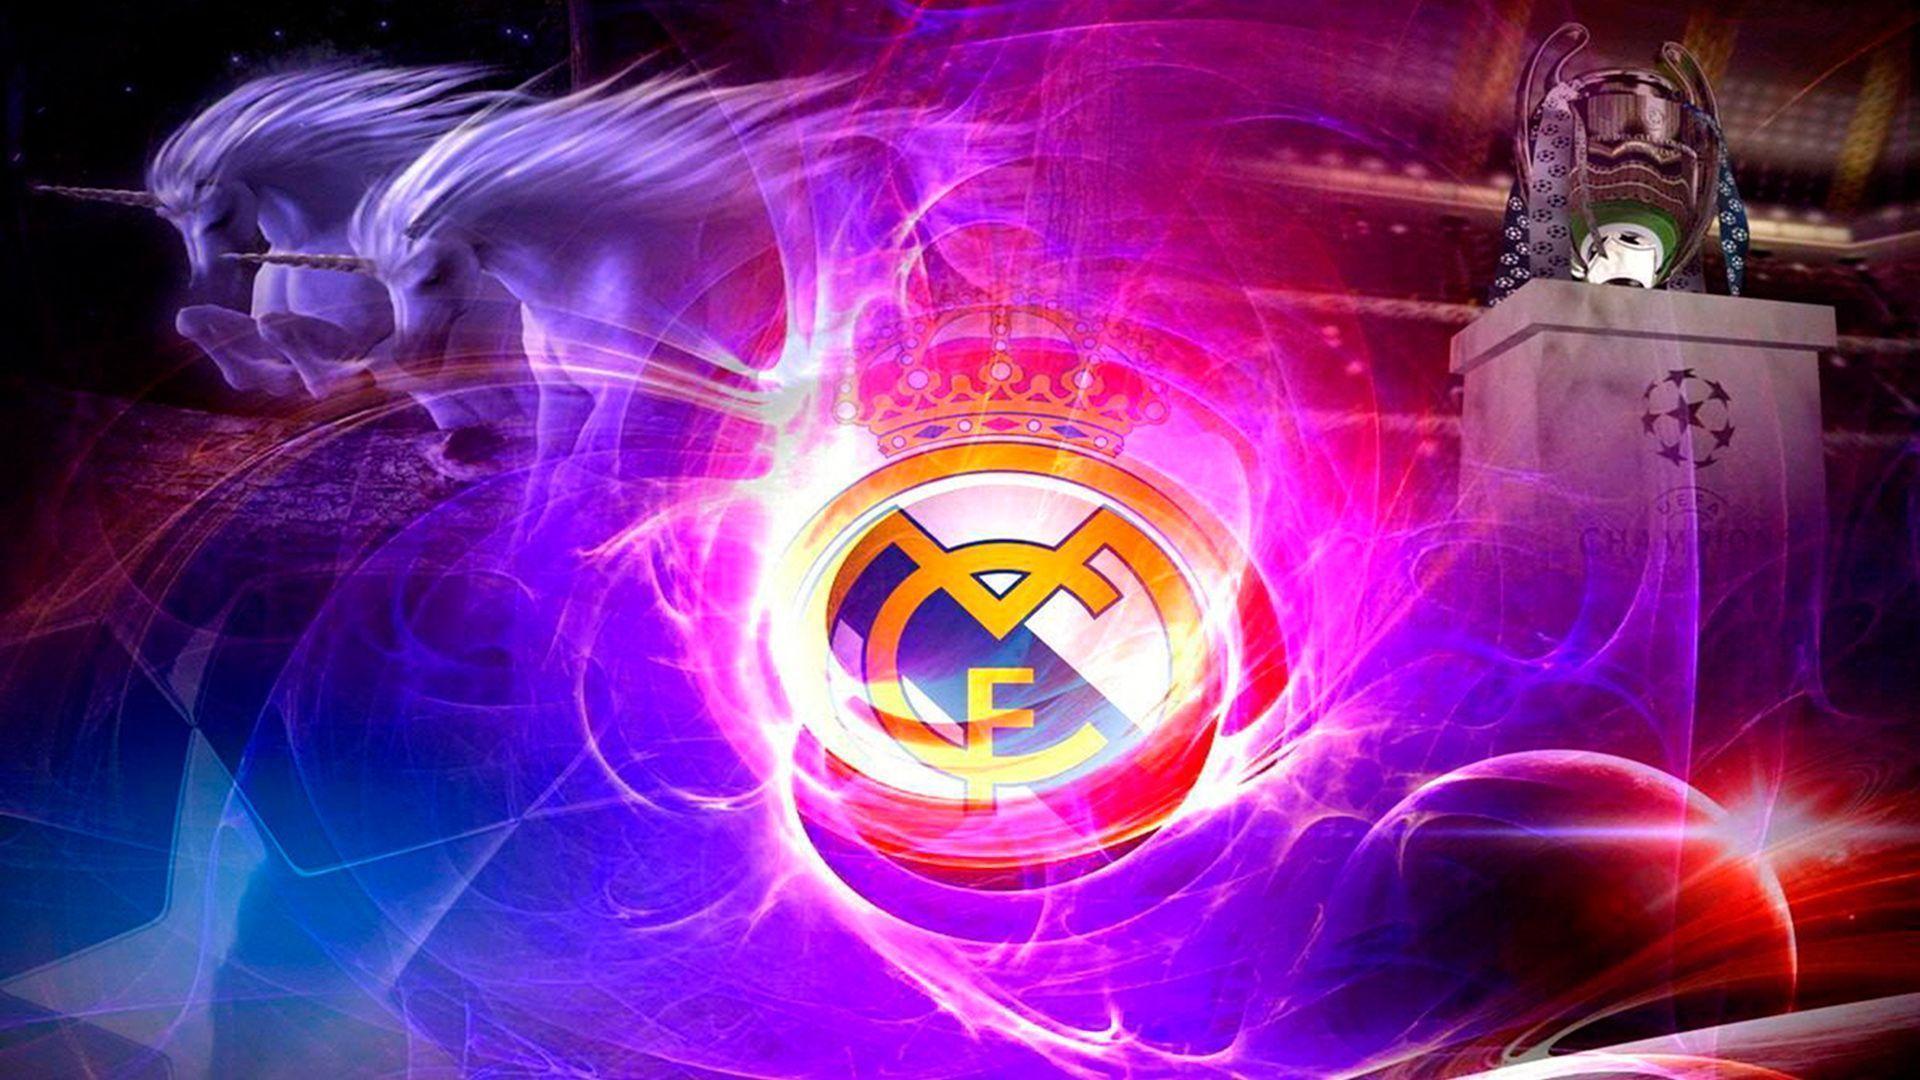 Real Madrid HD Wallpaper